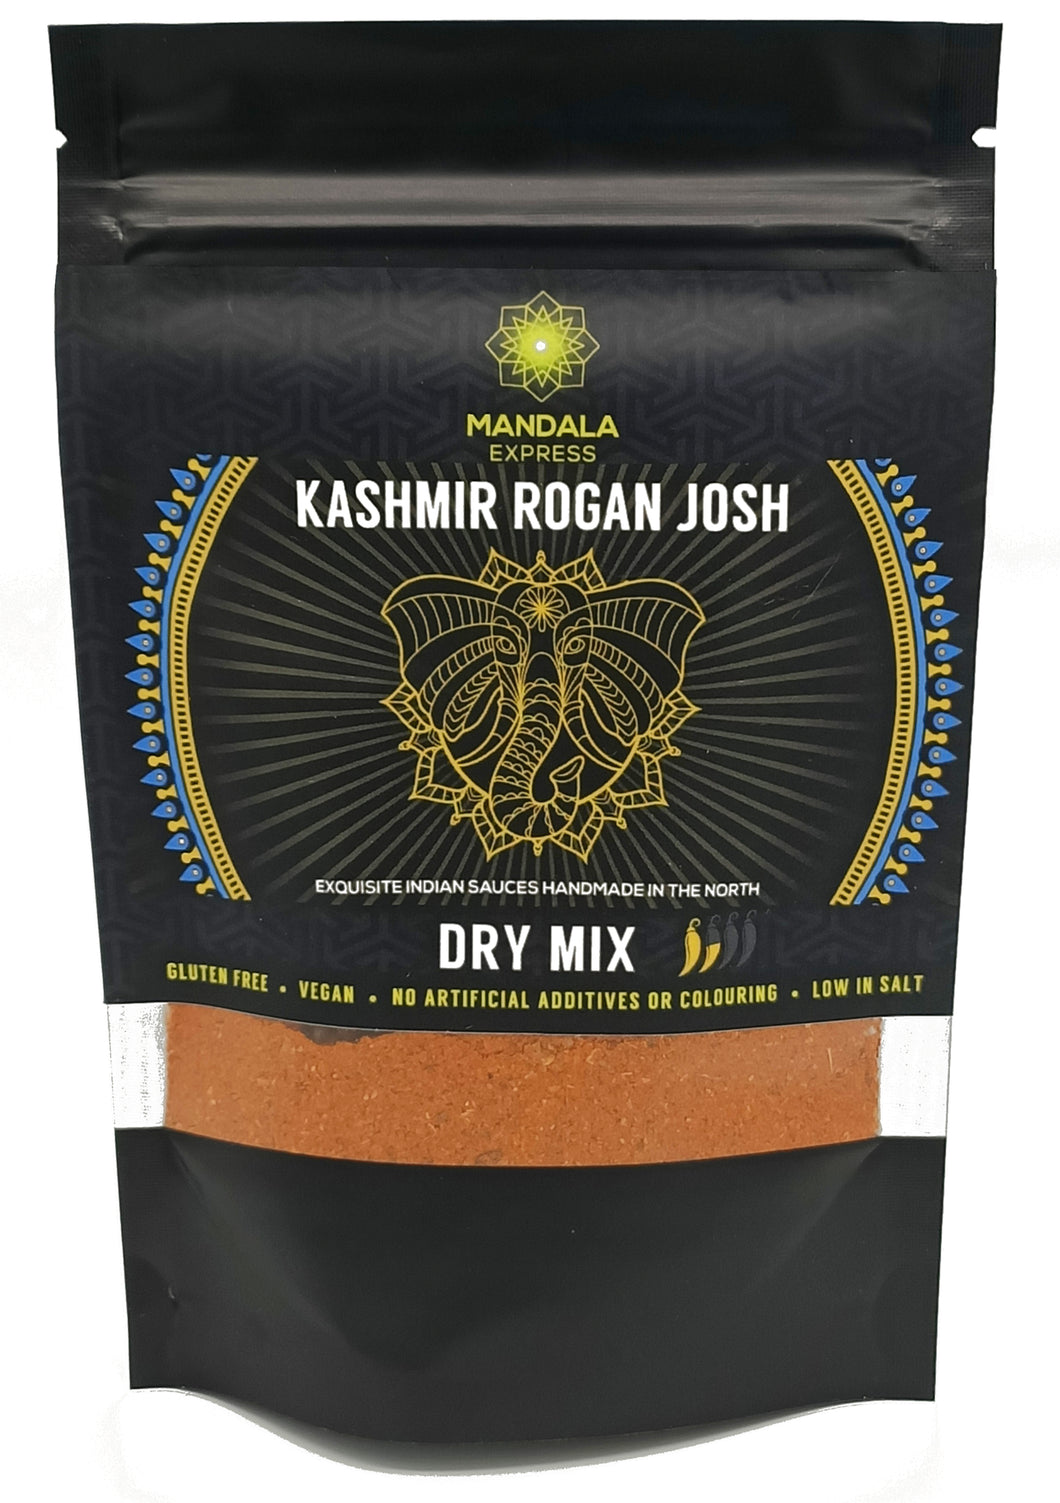 Kashmir Rogan Josh (Serves 4)